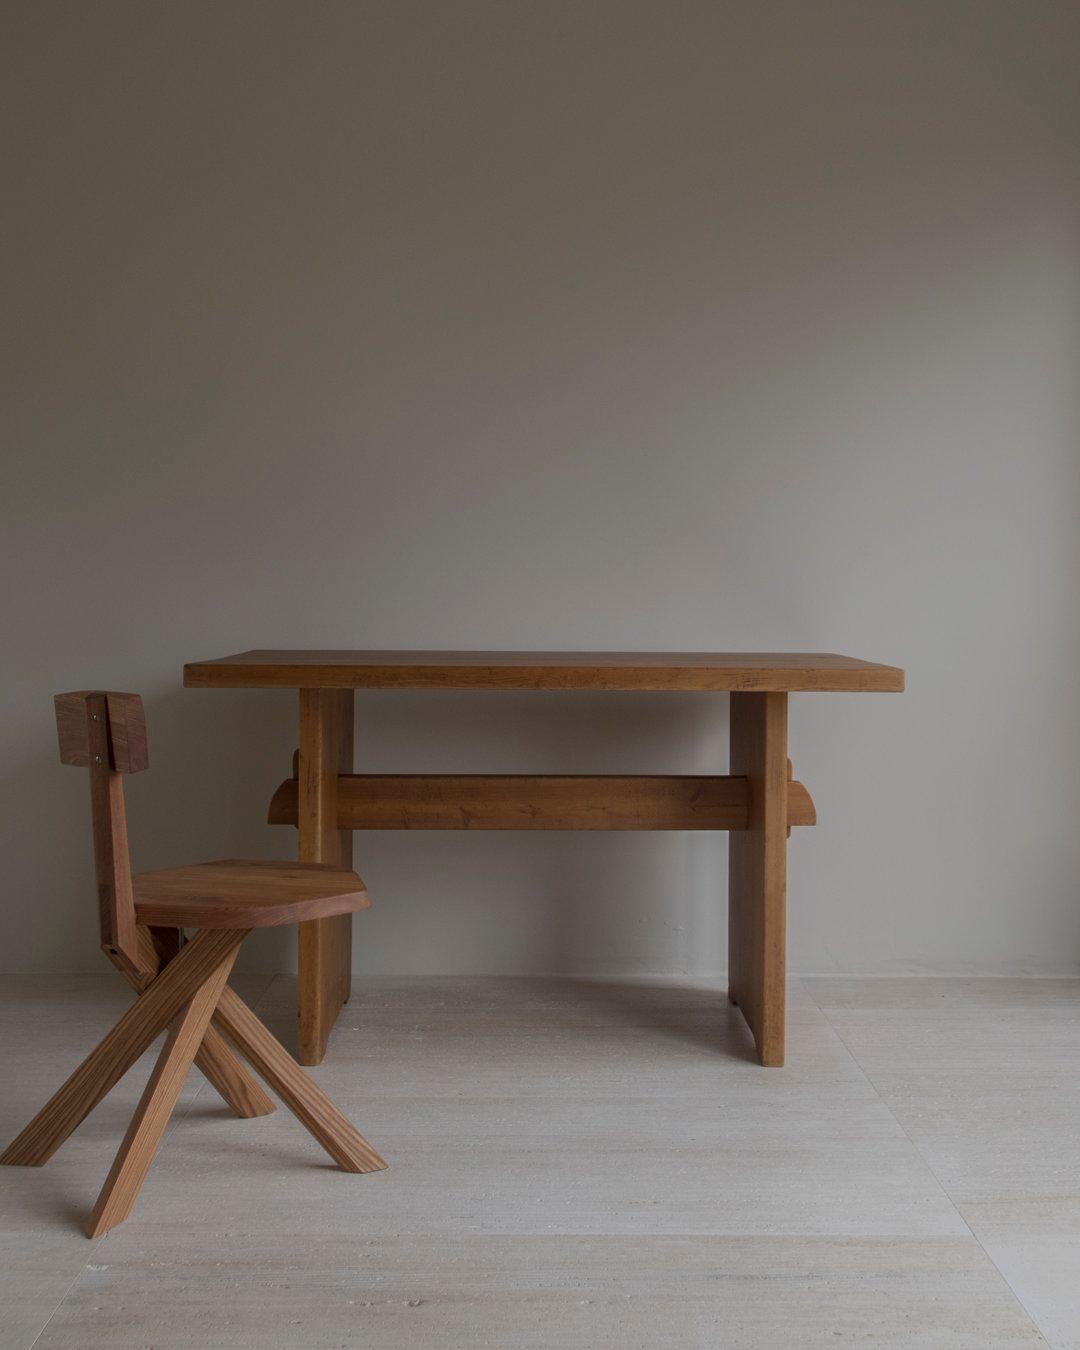 Hand-Crafted Axel Einar Hjorth - Lovö Table, Pine - Nordiska Kompaniet - Mid Century Modern For Sale